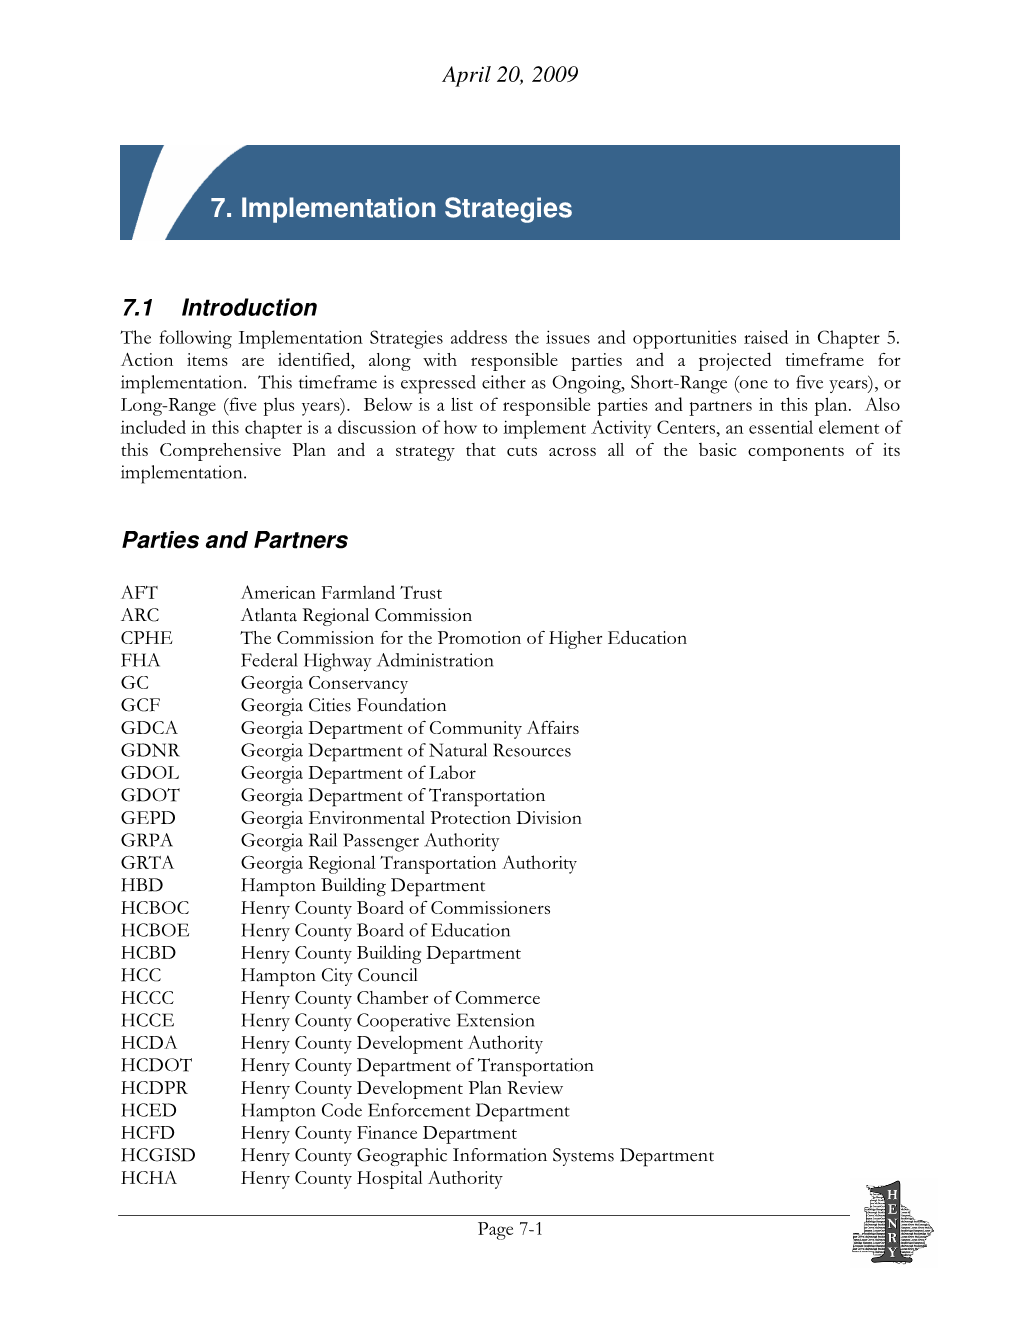 7. Implementation Strategies